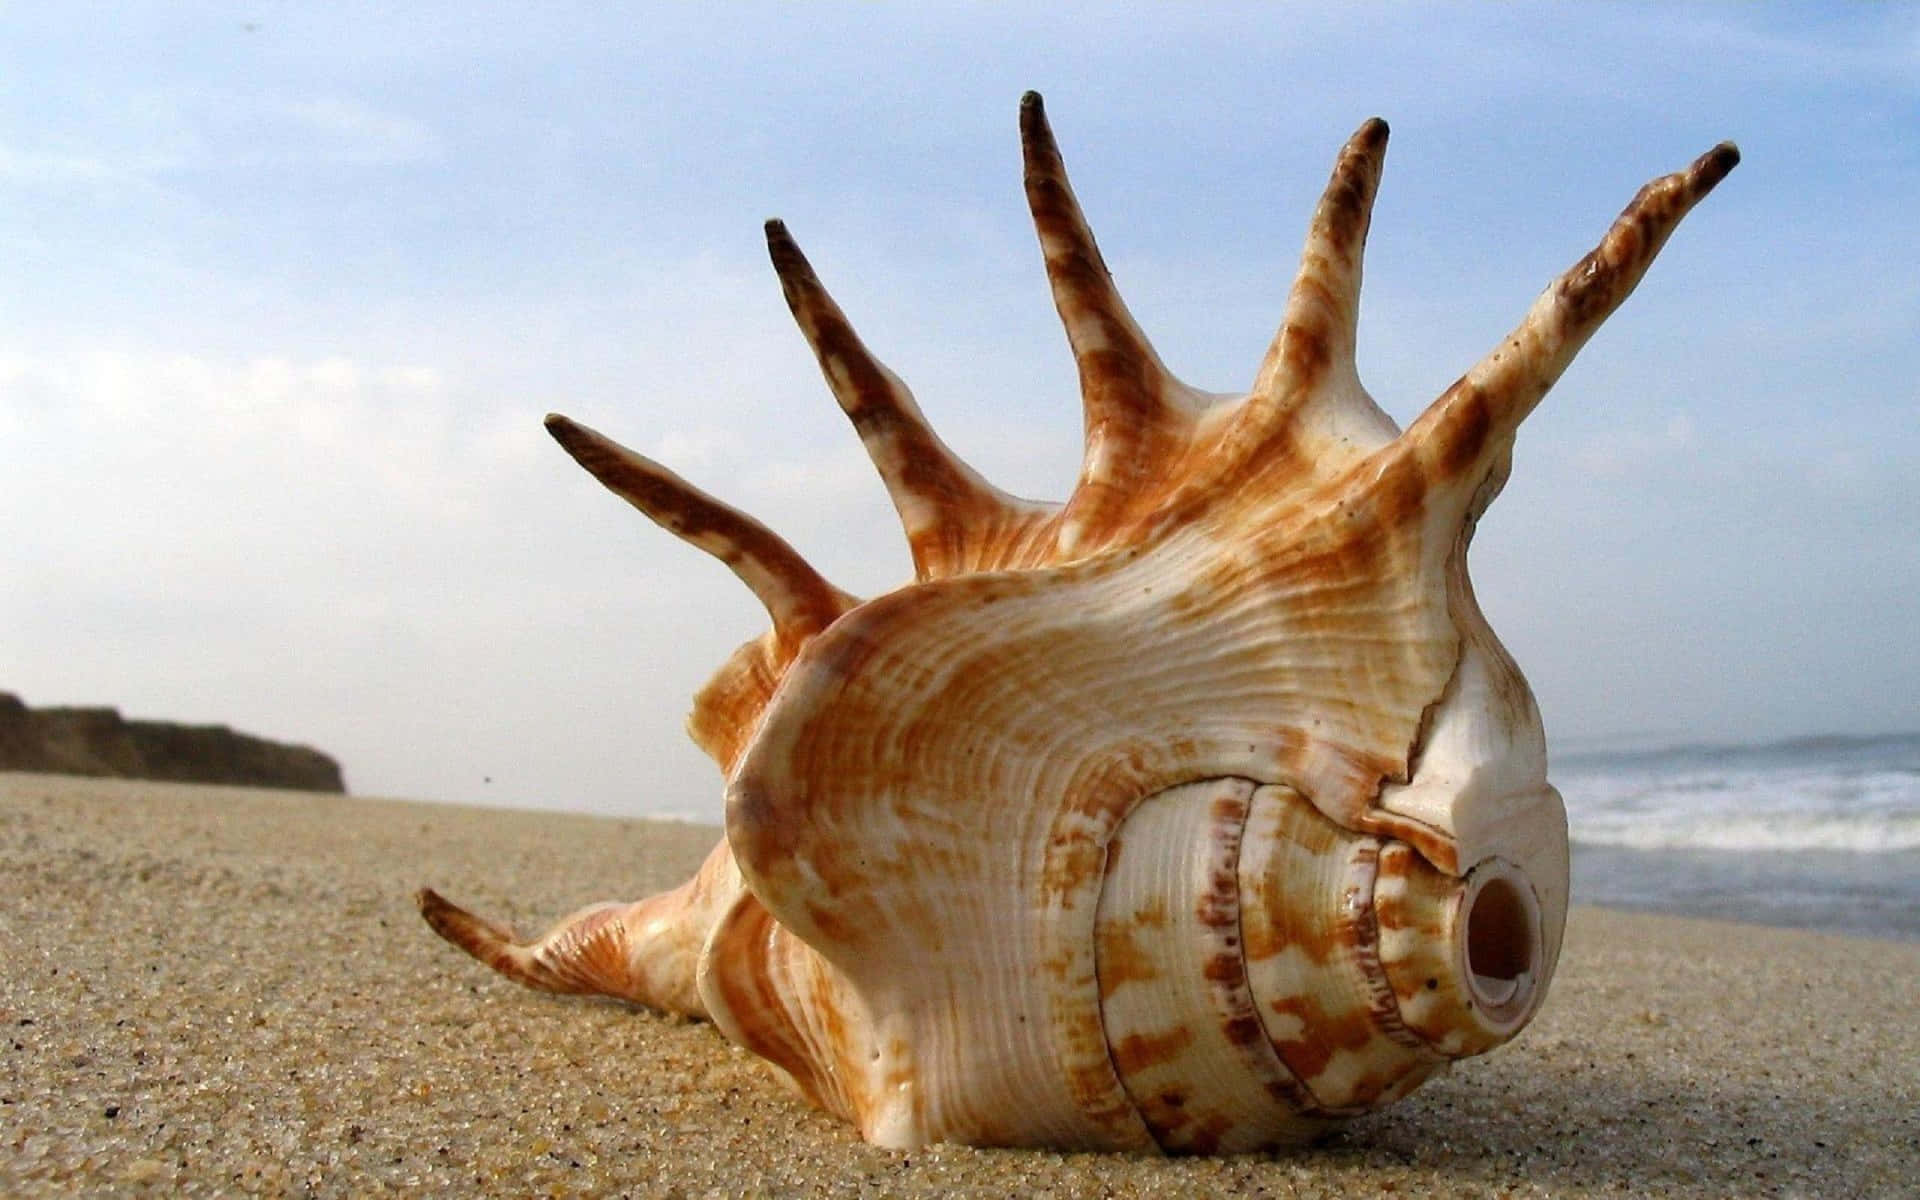 Stunning Seashell Close-up on the Beach